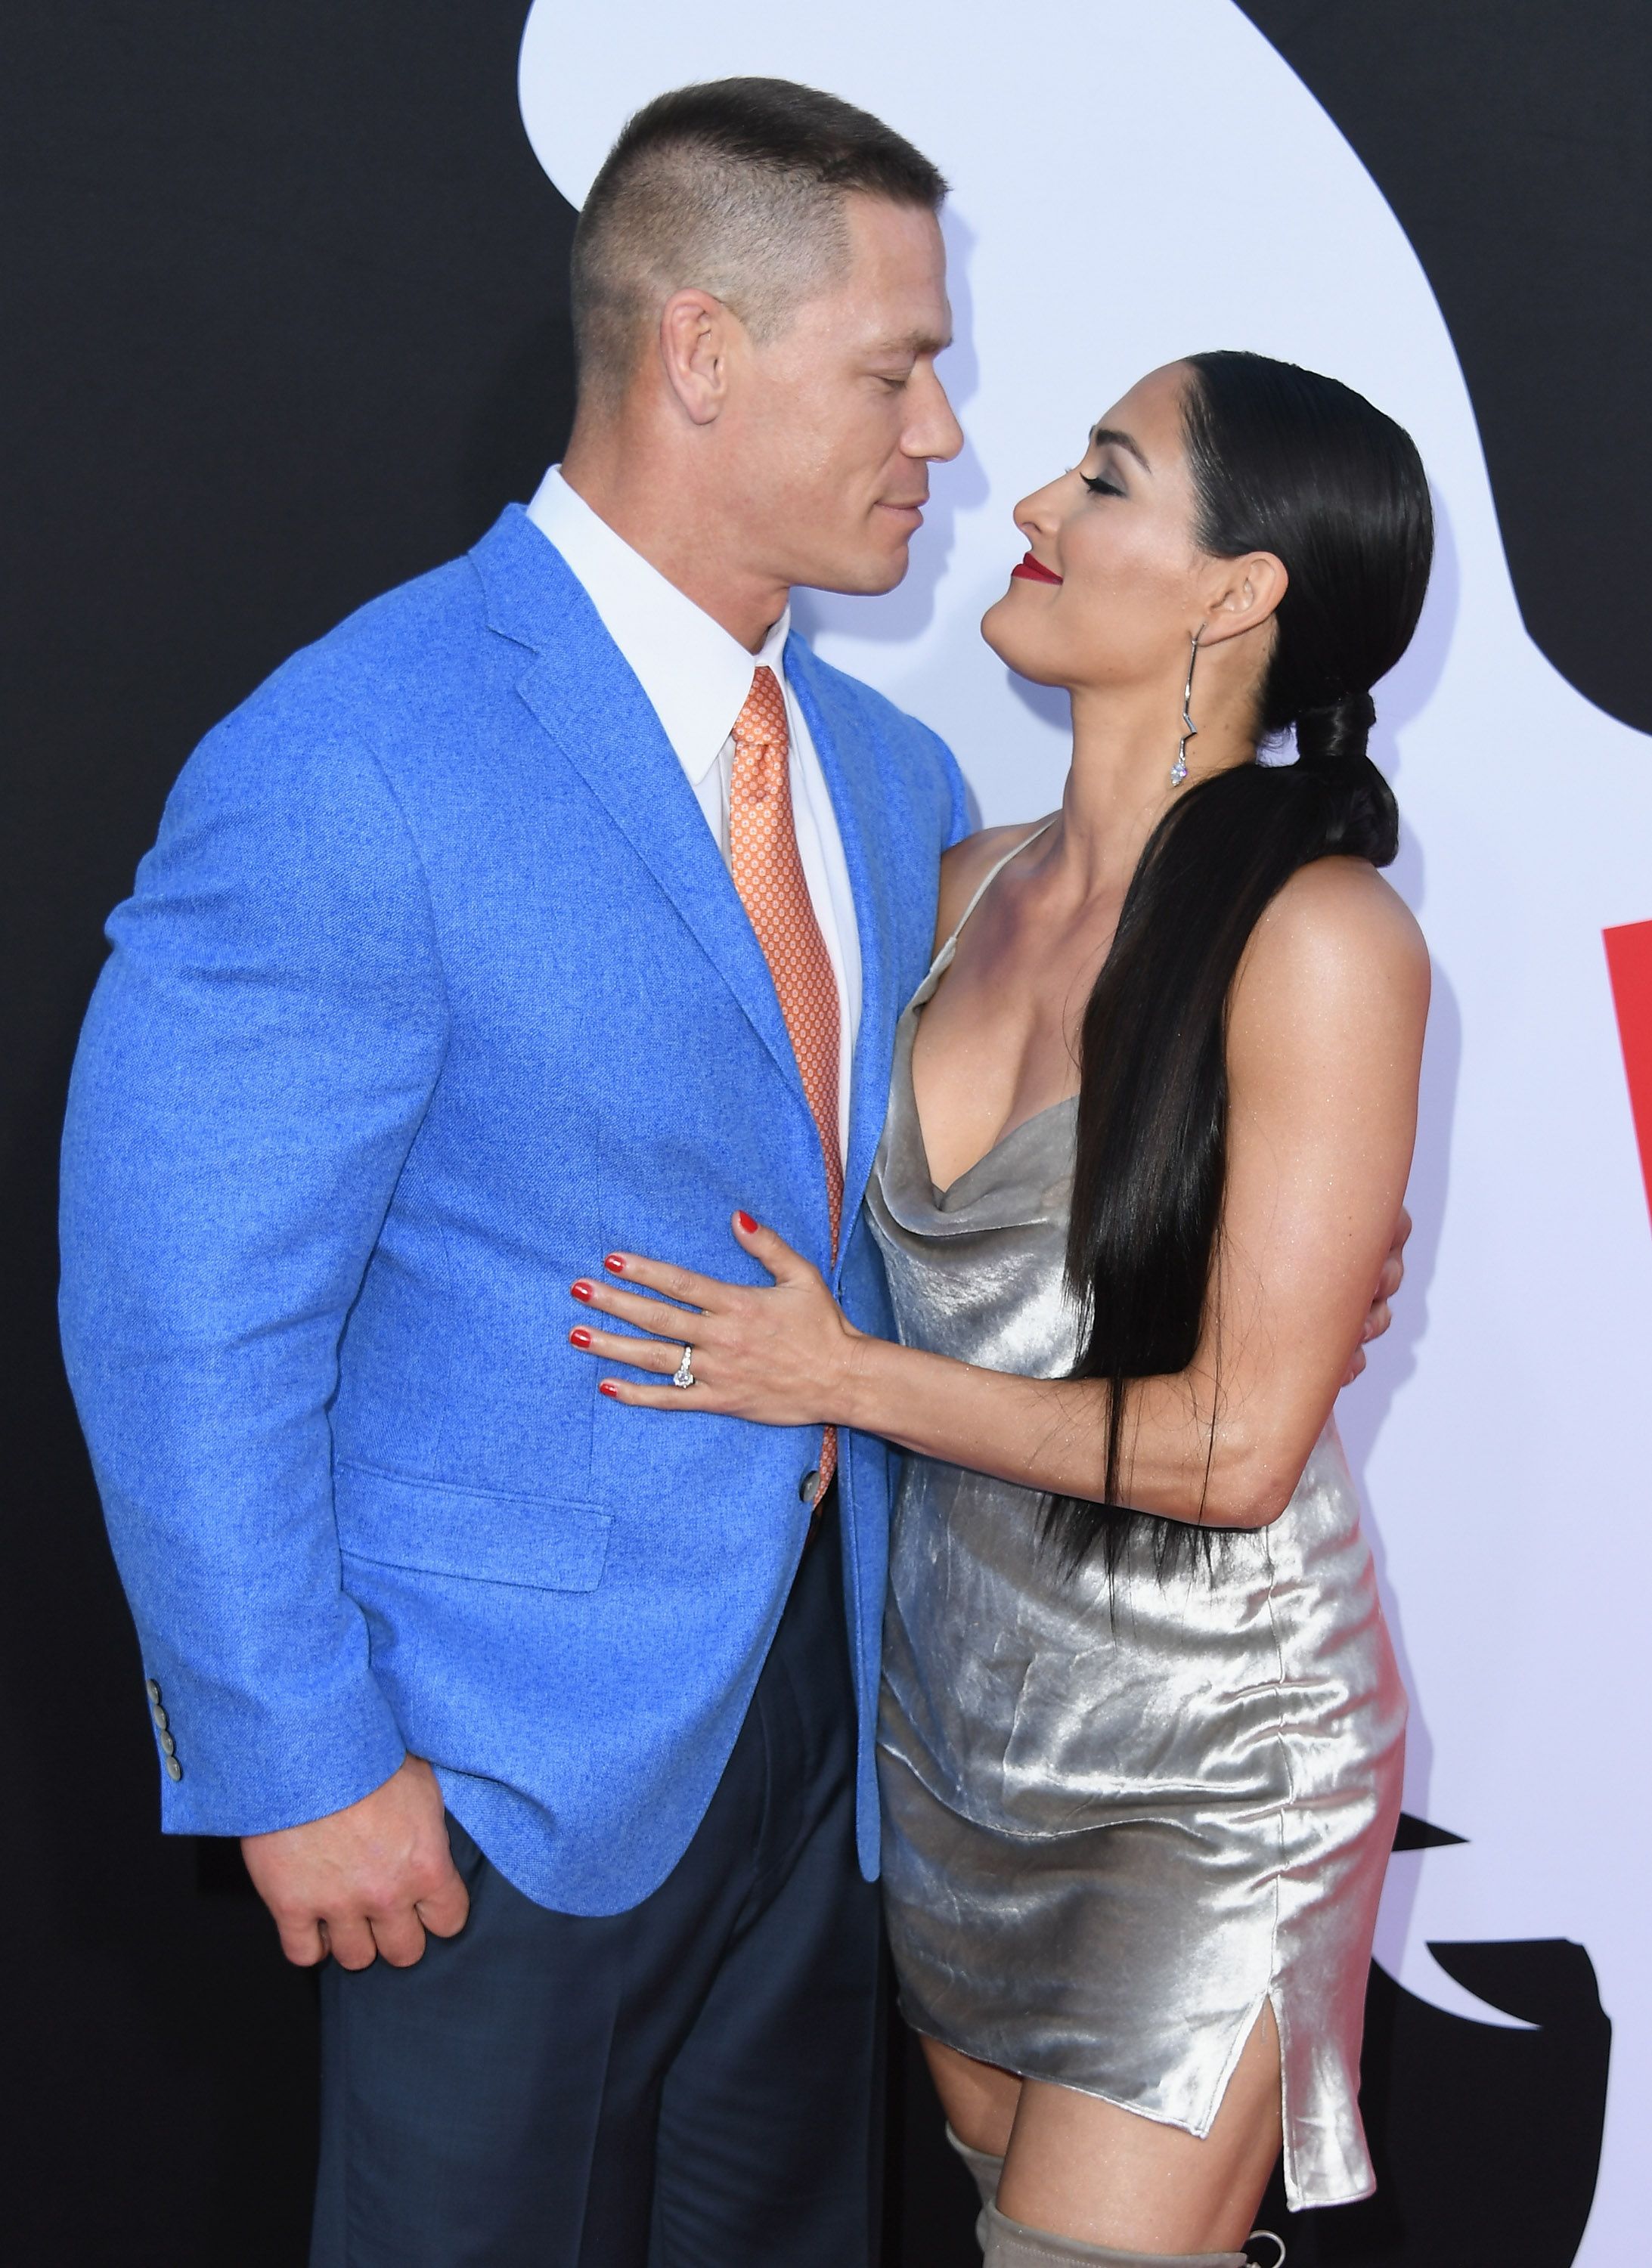 John Cena and Nikki Bella Relationship Timeline - When Did John Cena and Nikki  Bella Break Up